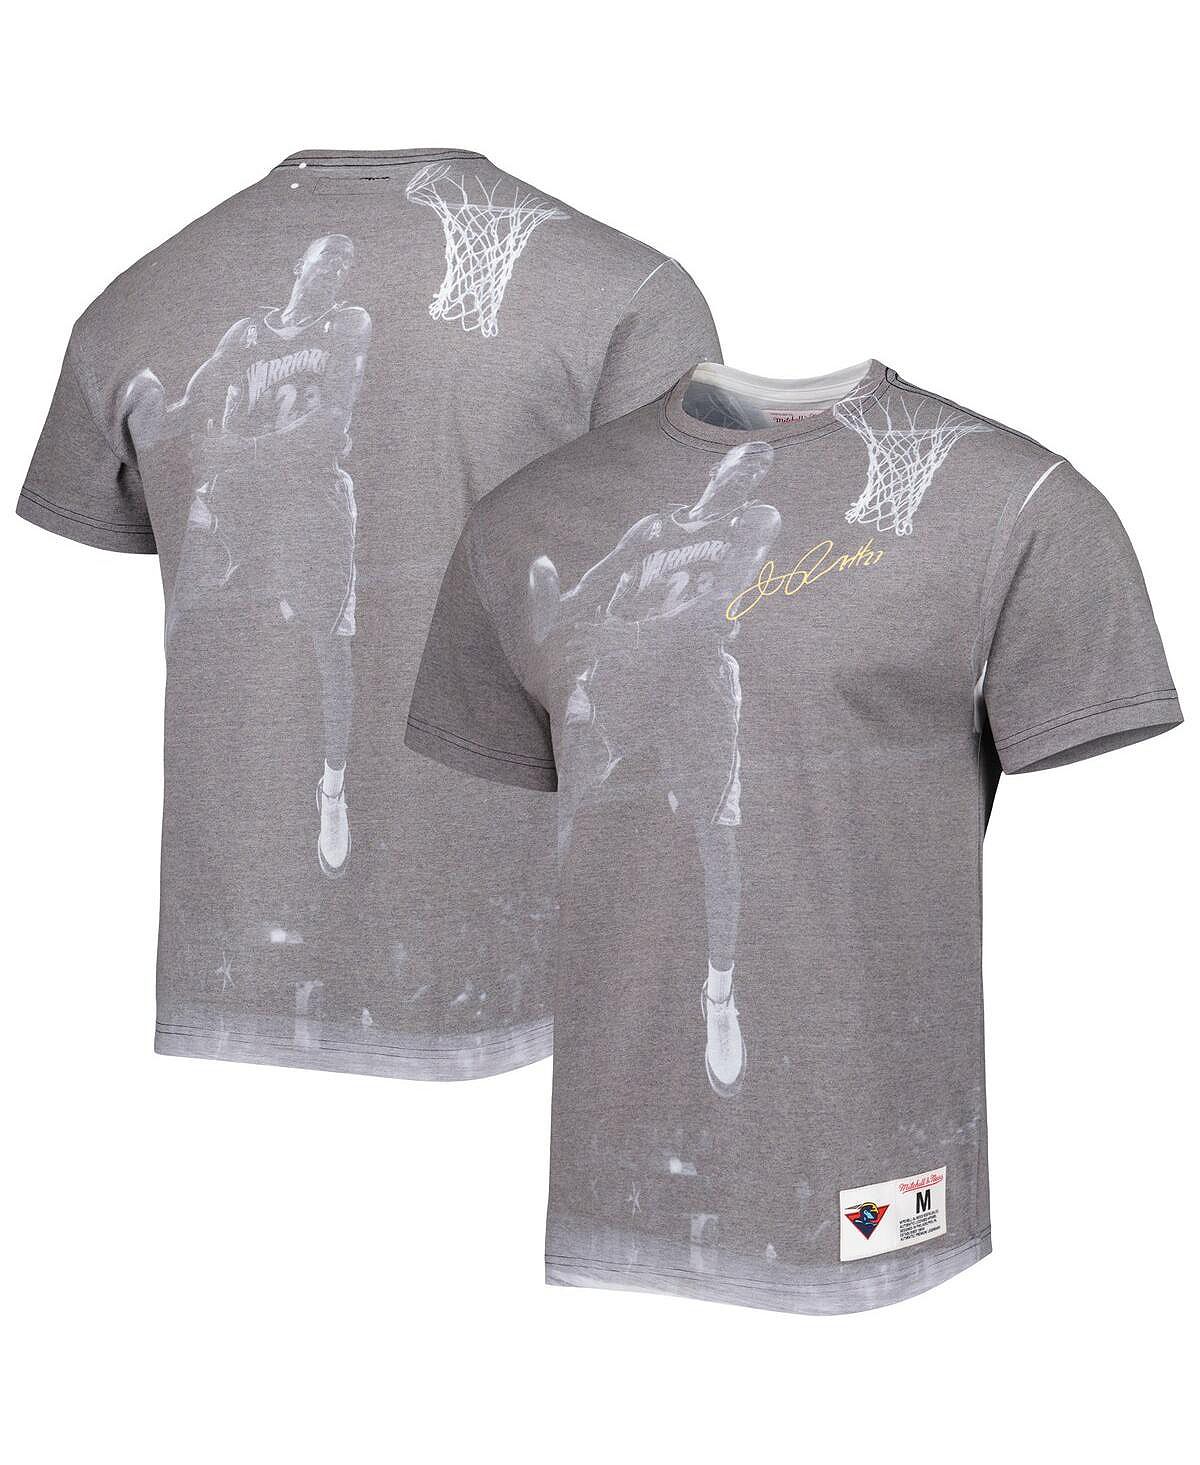 Мужская футболка jason richardson grey golden state warriors above the rim с сублимацией Mitchell & Ness, серый георгина голден септер шаровидная